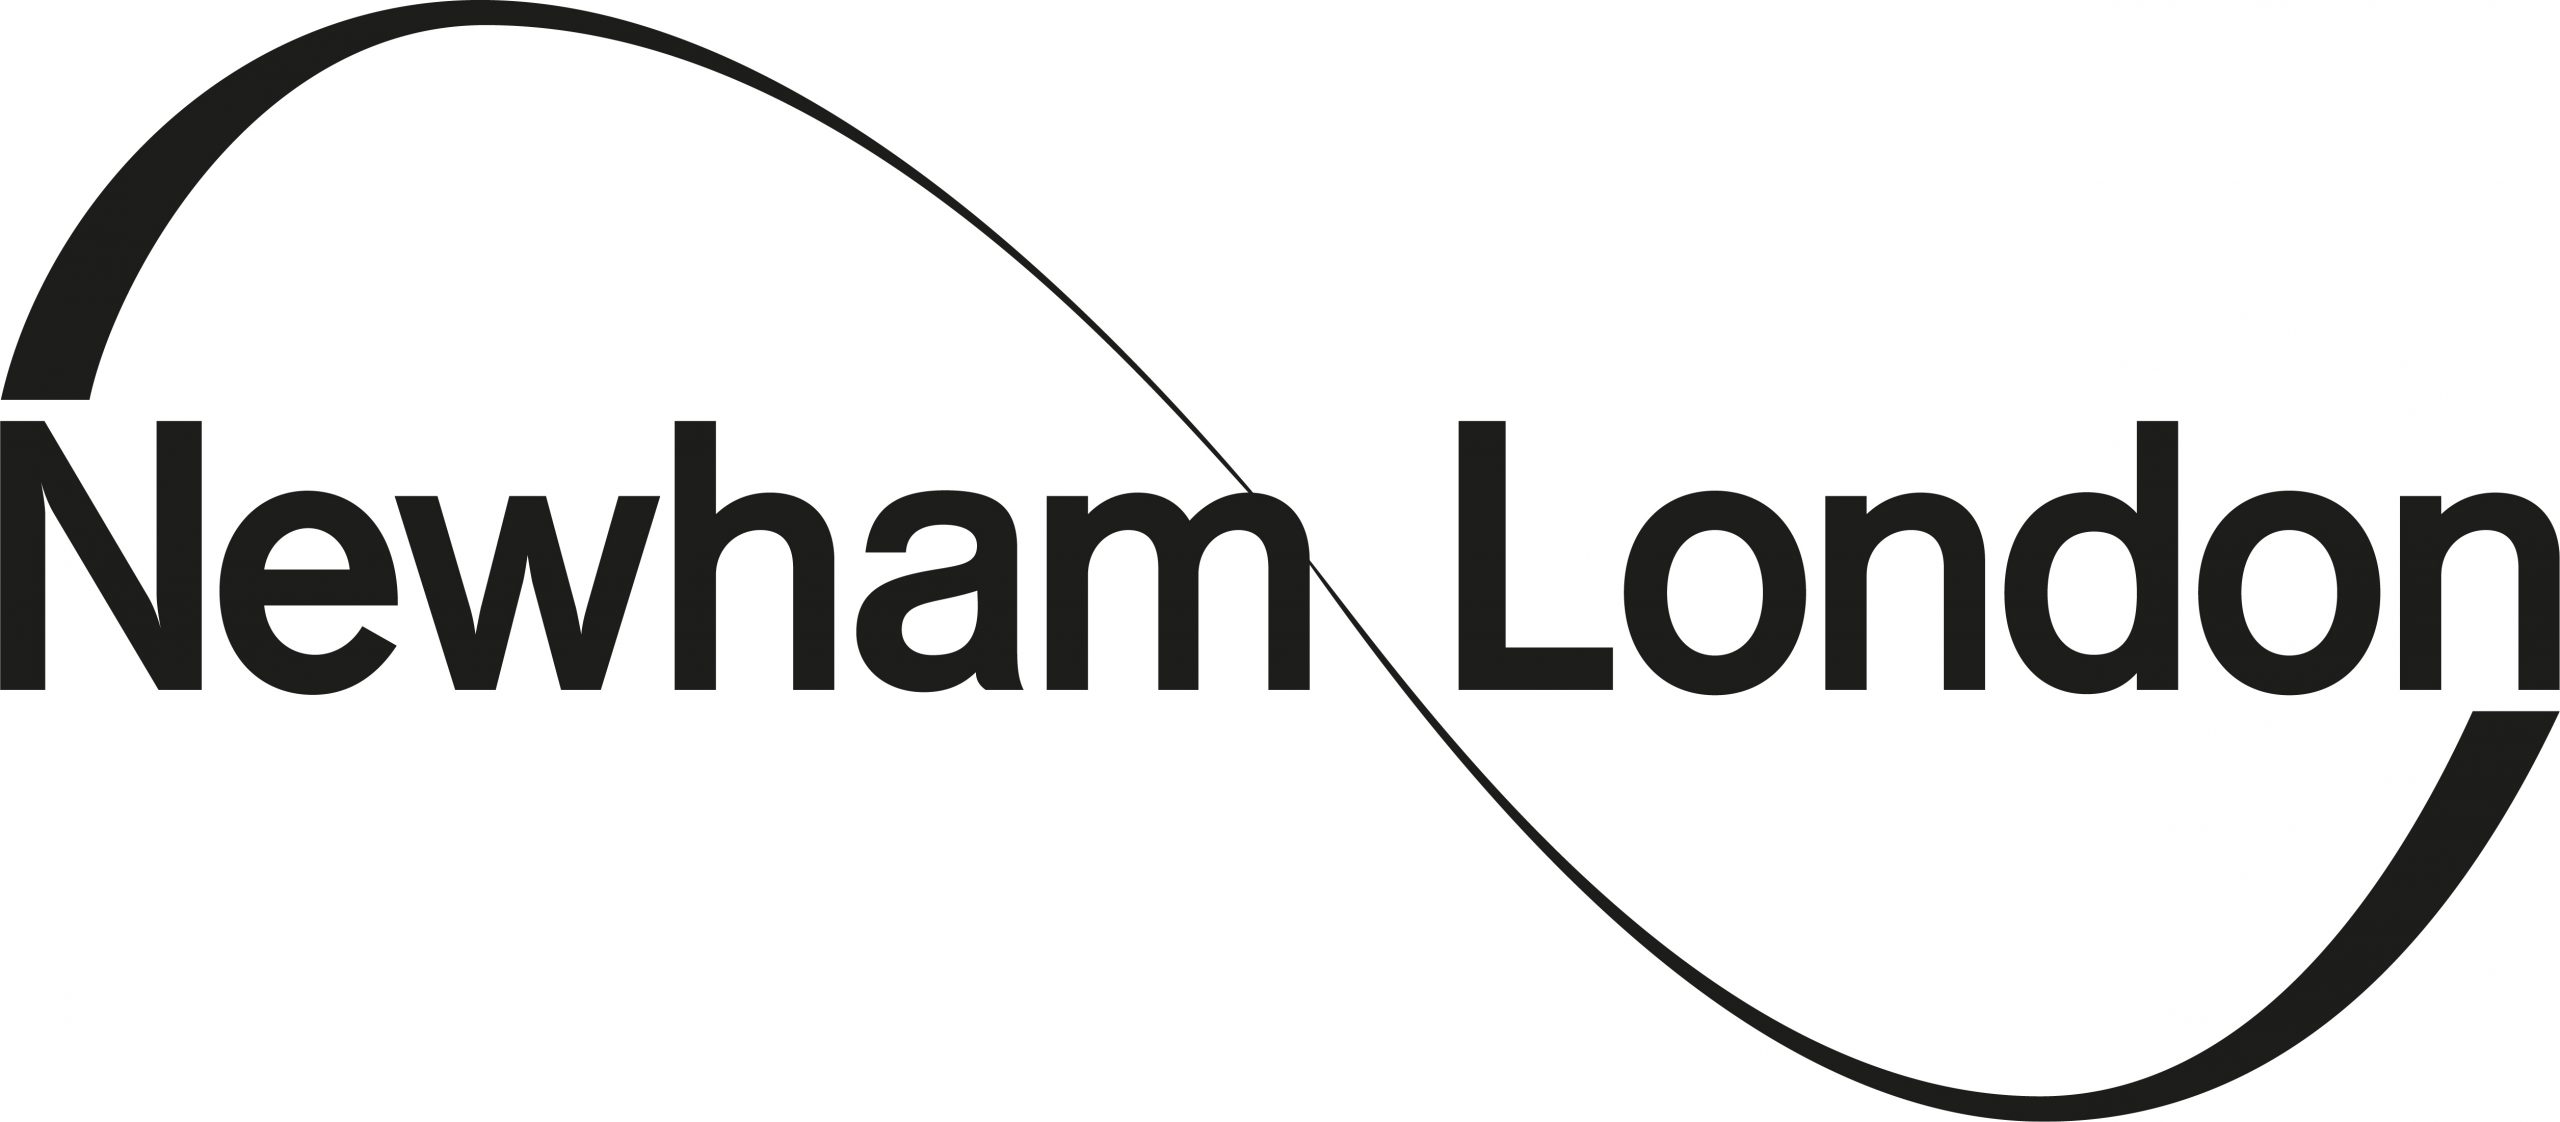 Newham London logo 